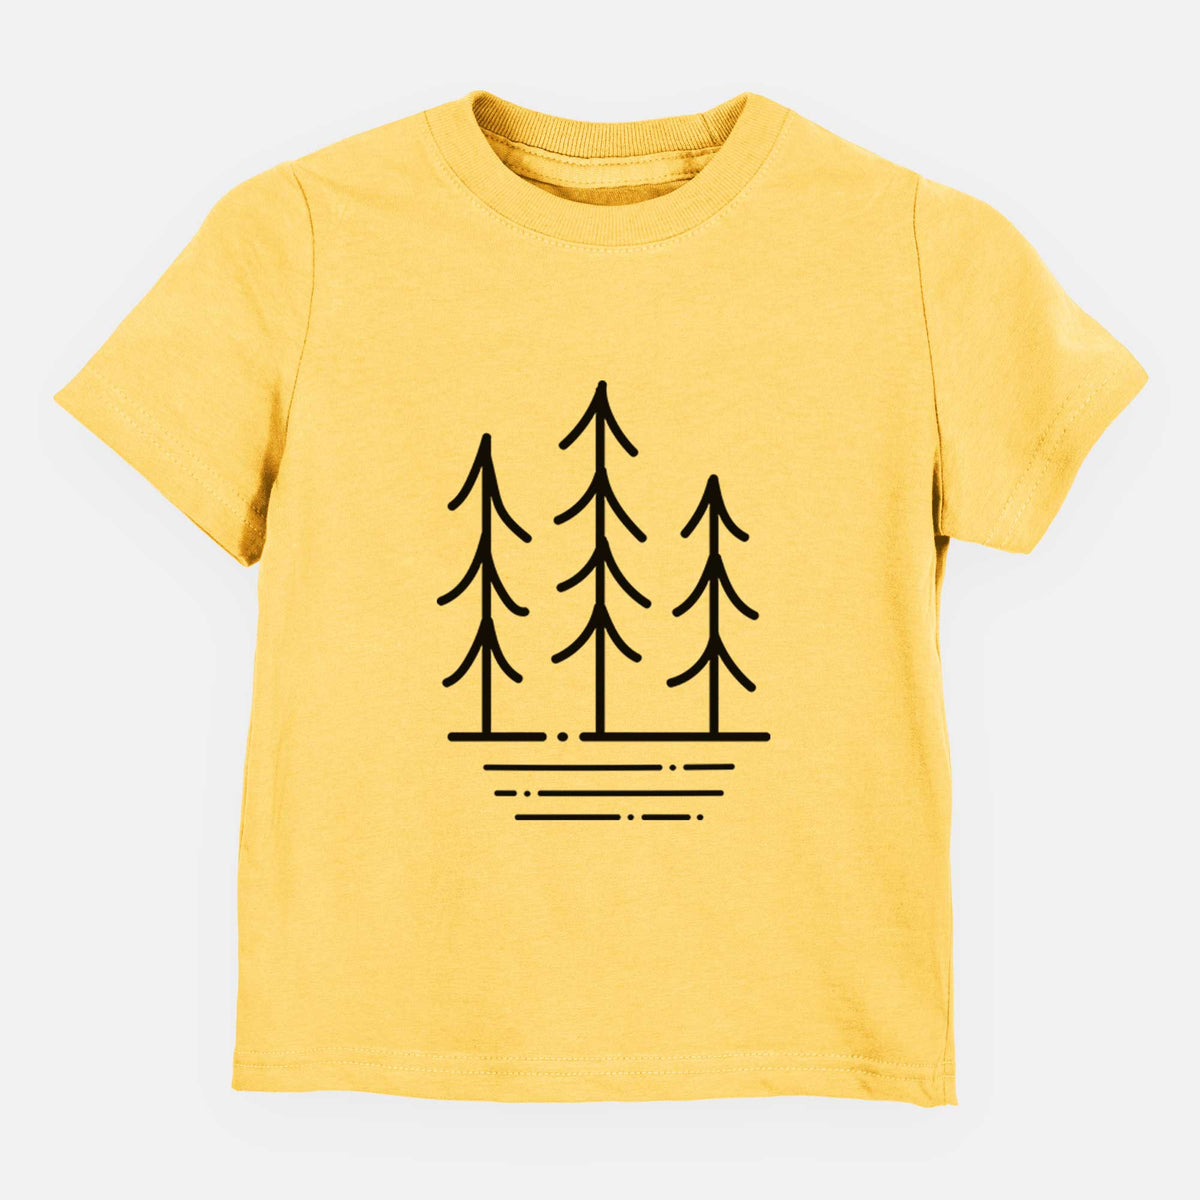 Three Trees - Kids Shirt